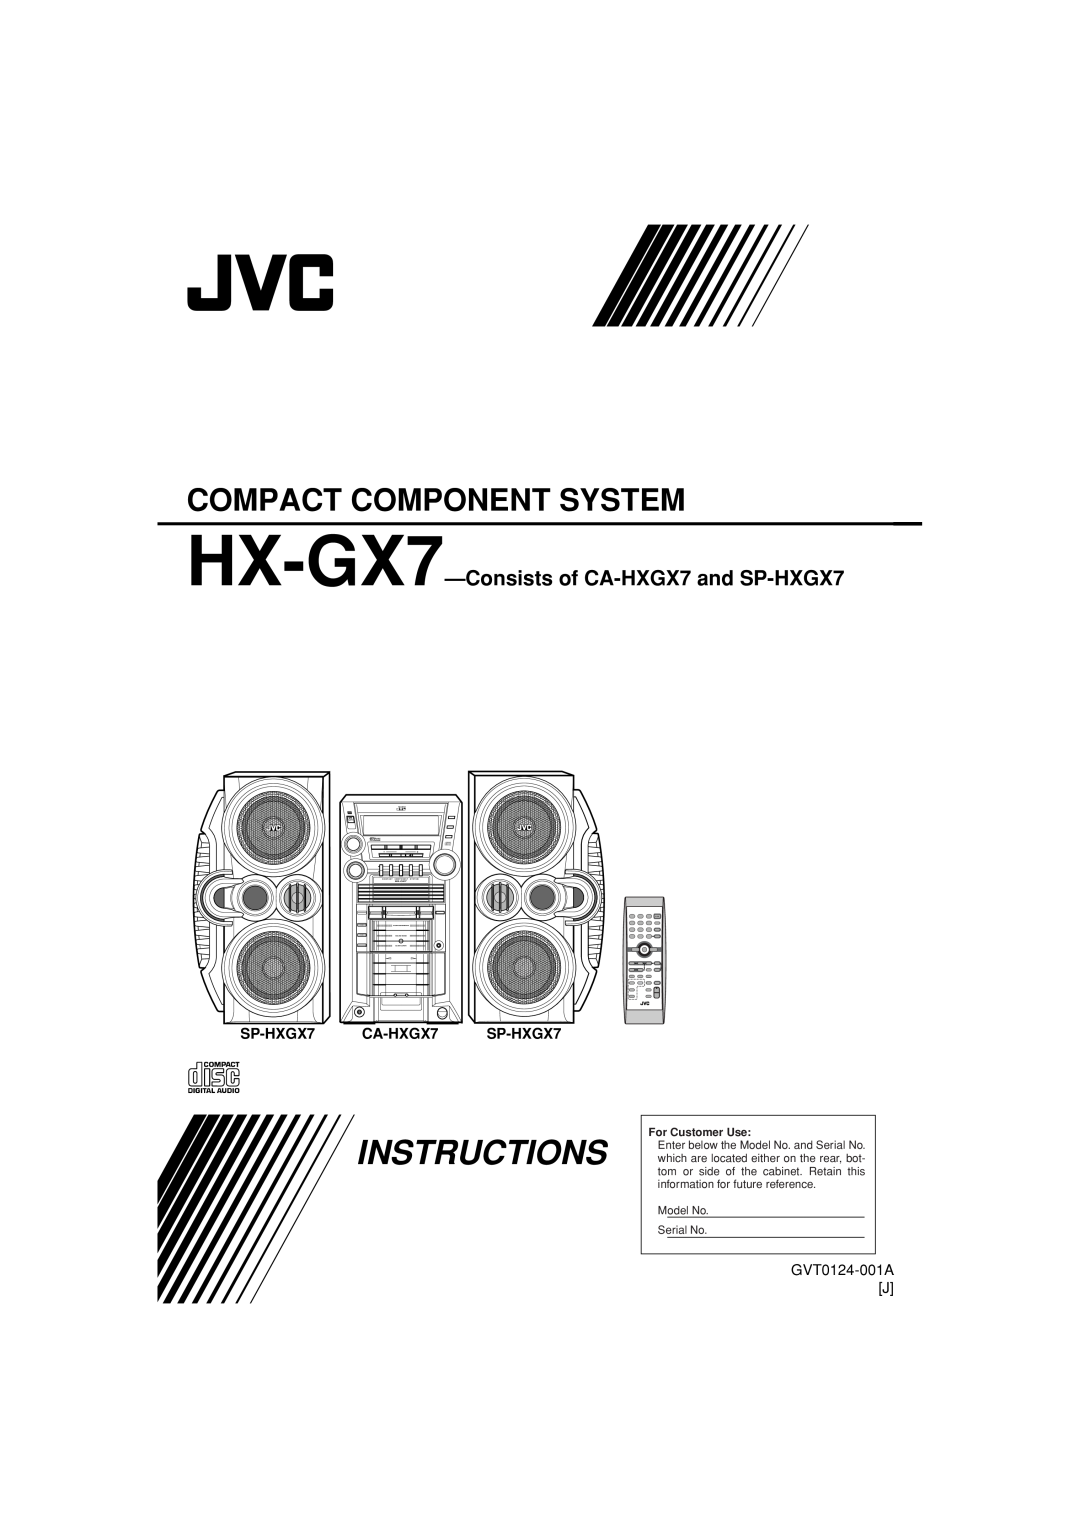 JVC manual HX-GX7-Consistsof CA-HXGX7and SP-HXGX7, Instructions, Compact Component System, SP-HXGX7 CA-HXGX7 SP-HXGX7 